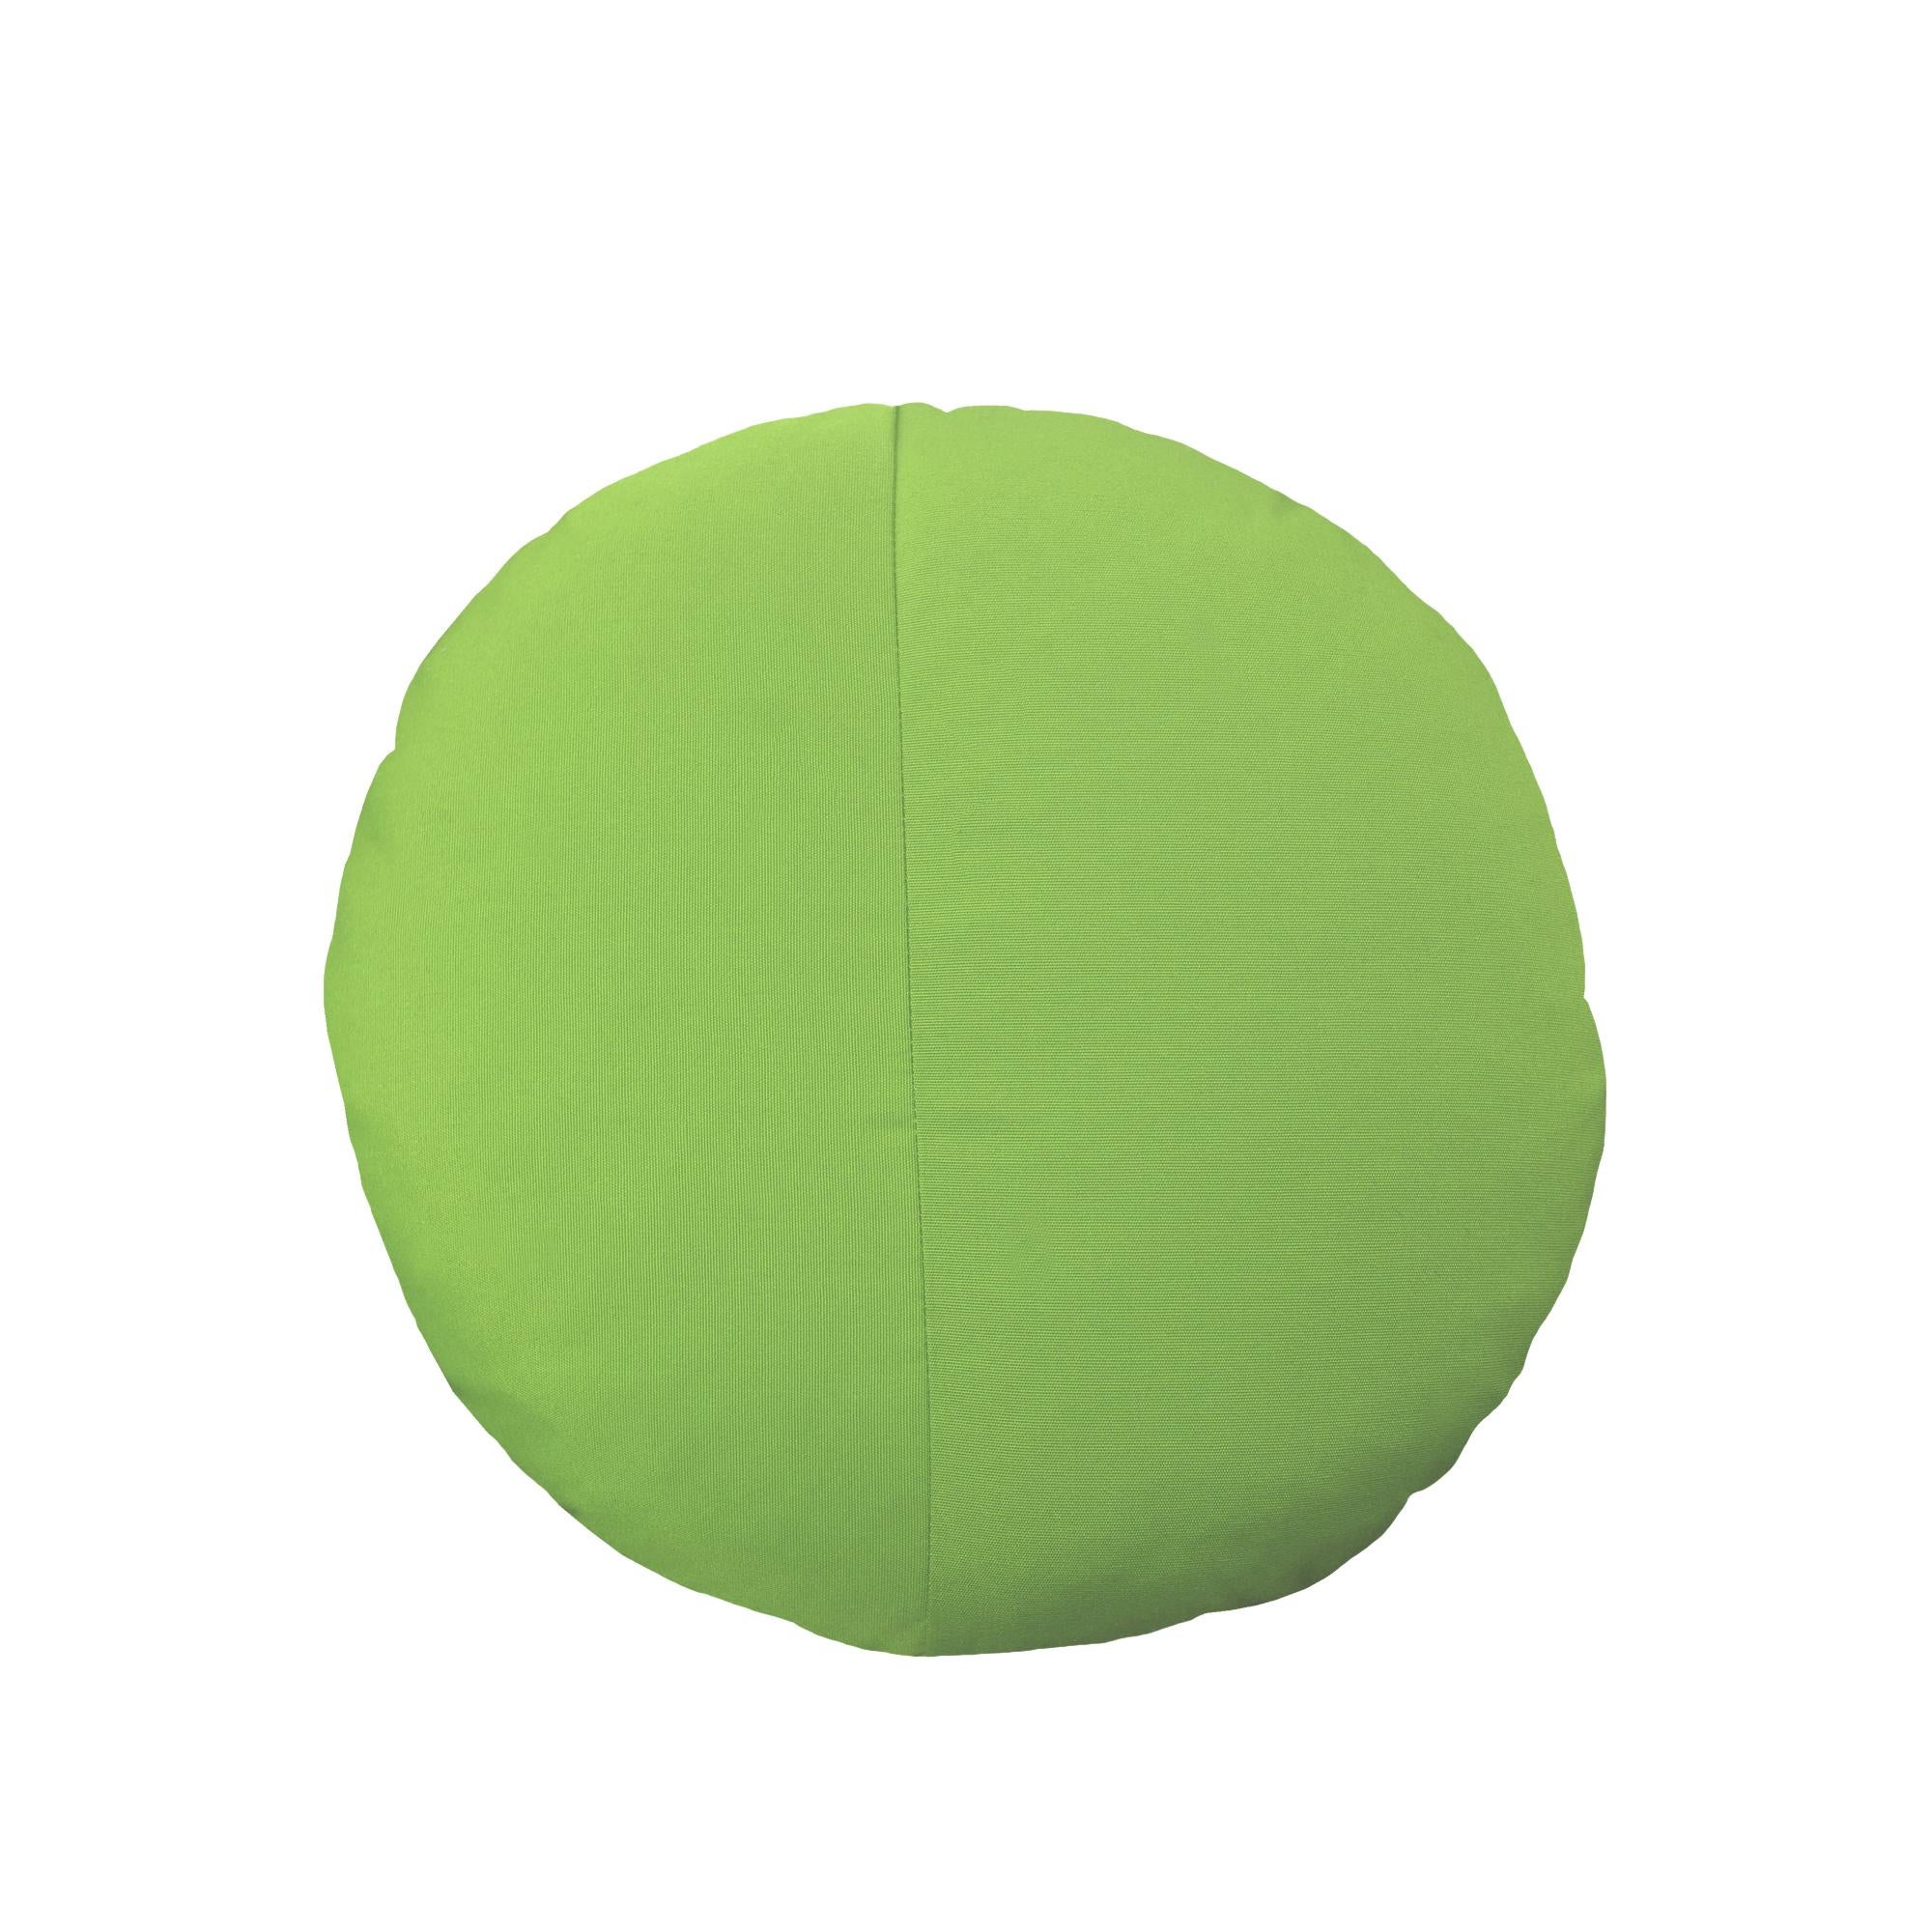 Bend Goods - Round Throw Pillow in Aruba Sunbrella In New Condition For Sale In Ontario, CA